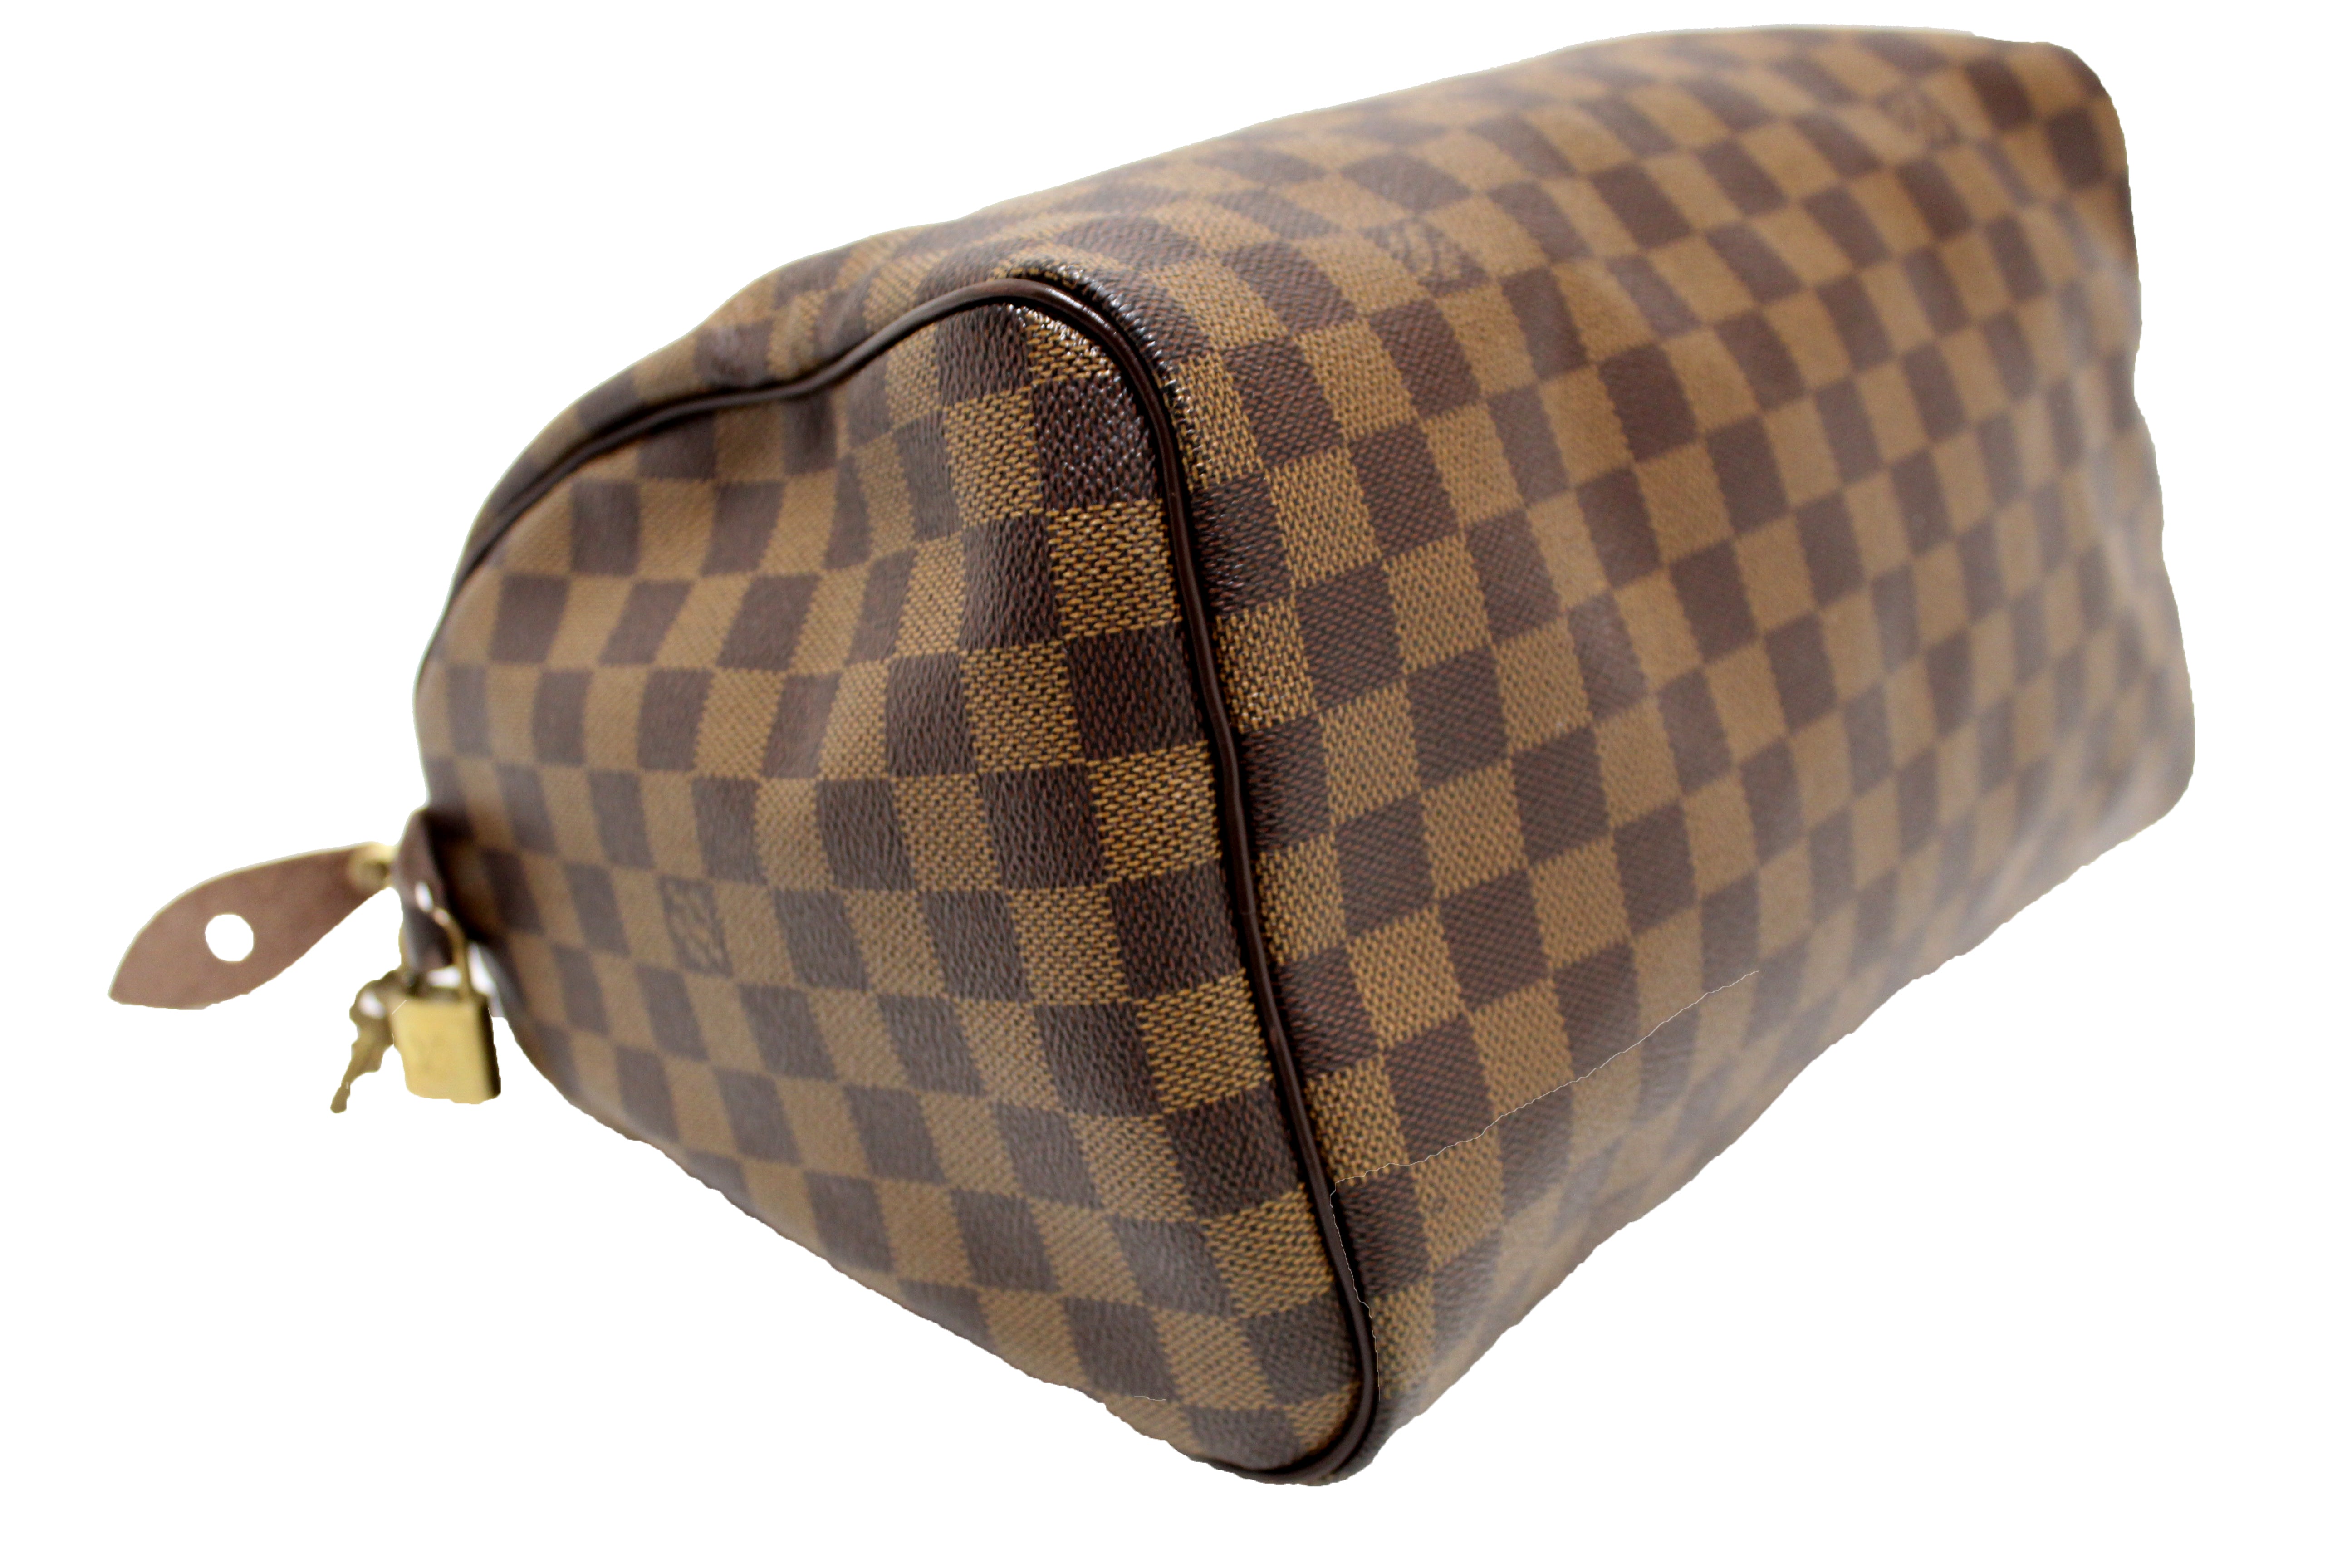 Louis Vuitton Speedy 30 Damier Ebene Canvas Handbag - Boca Pawn